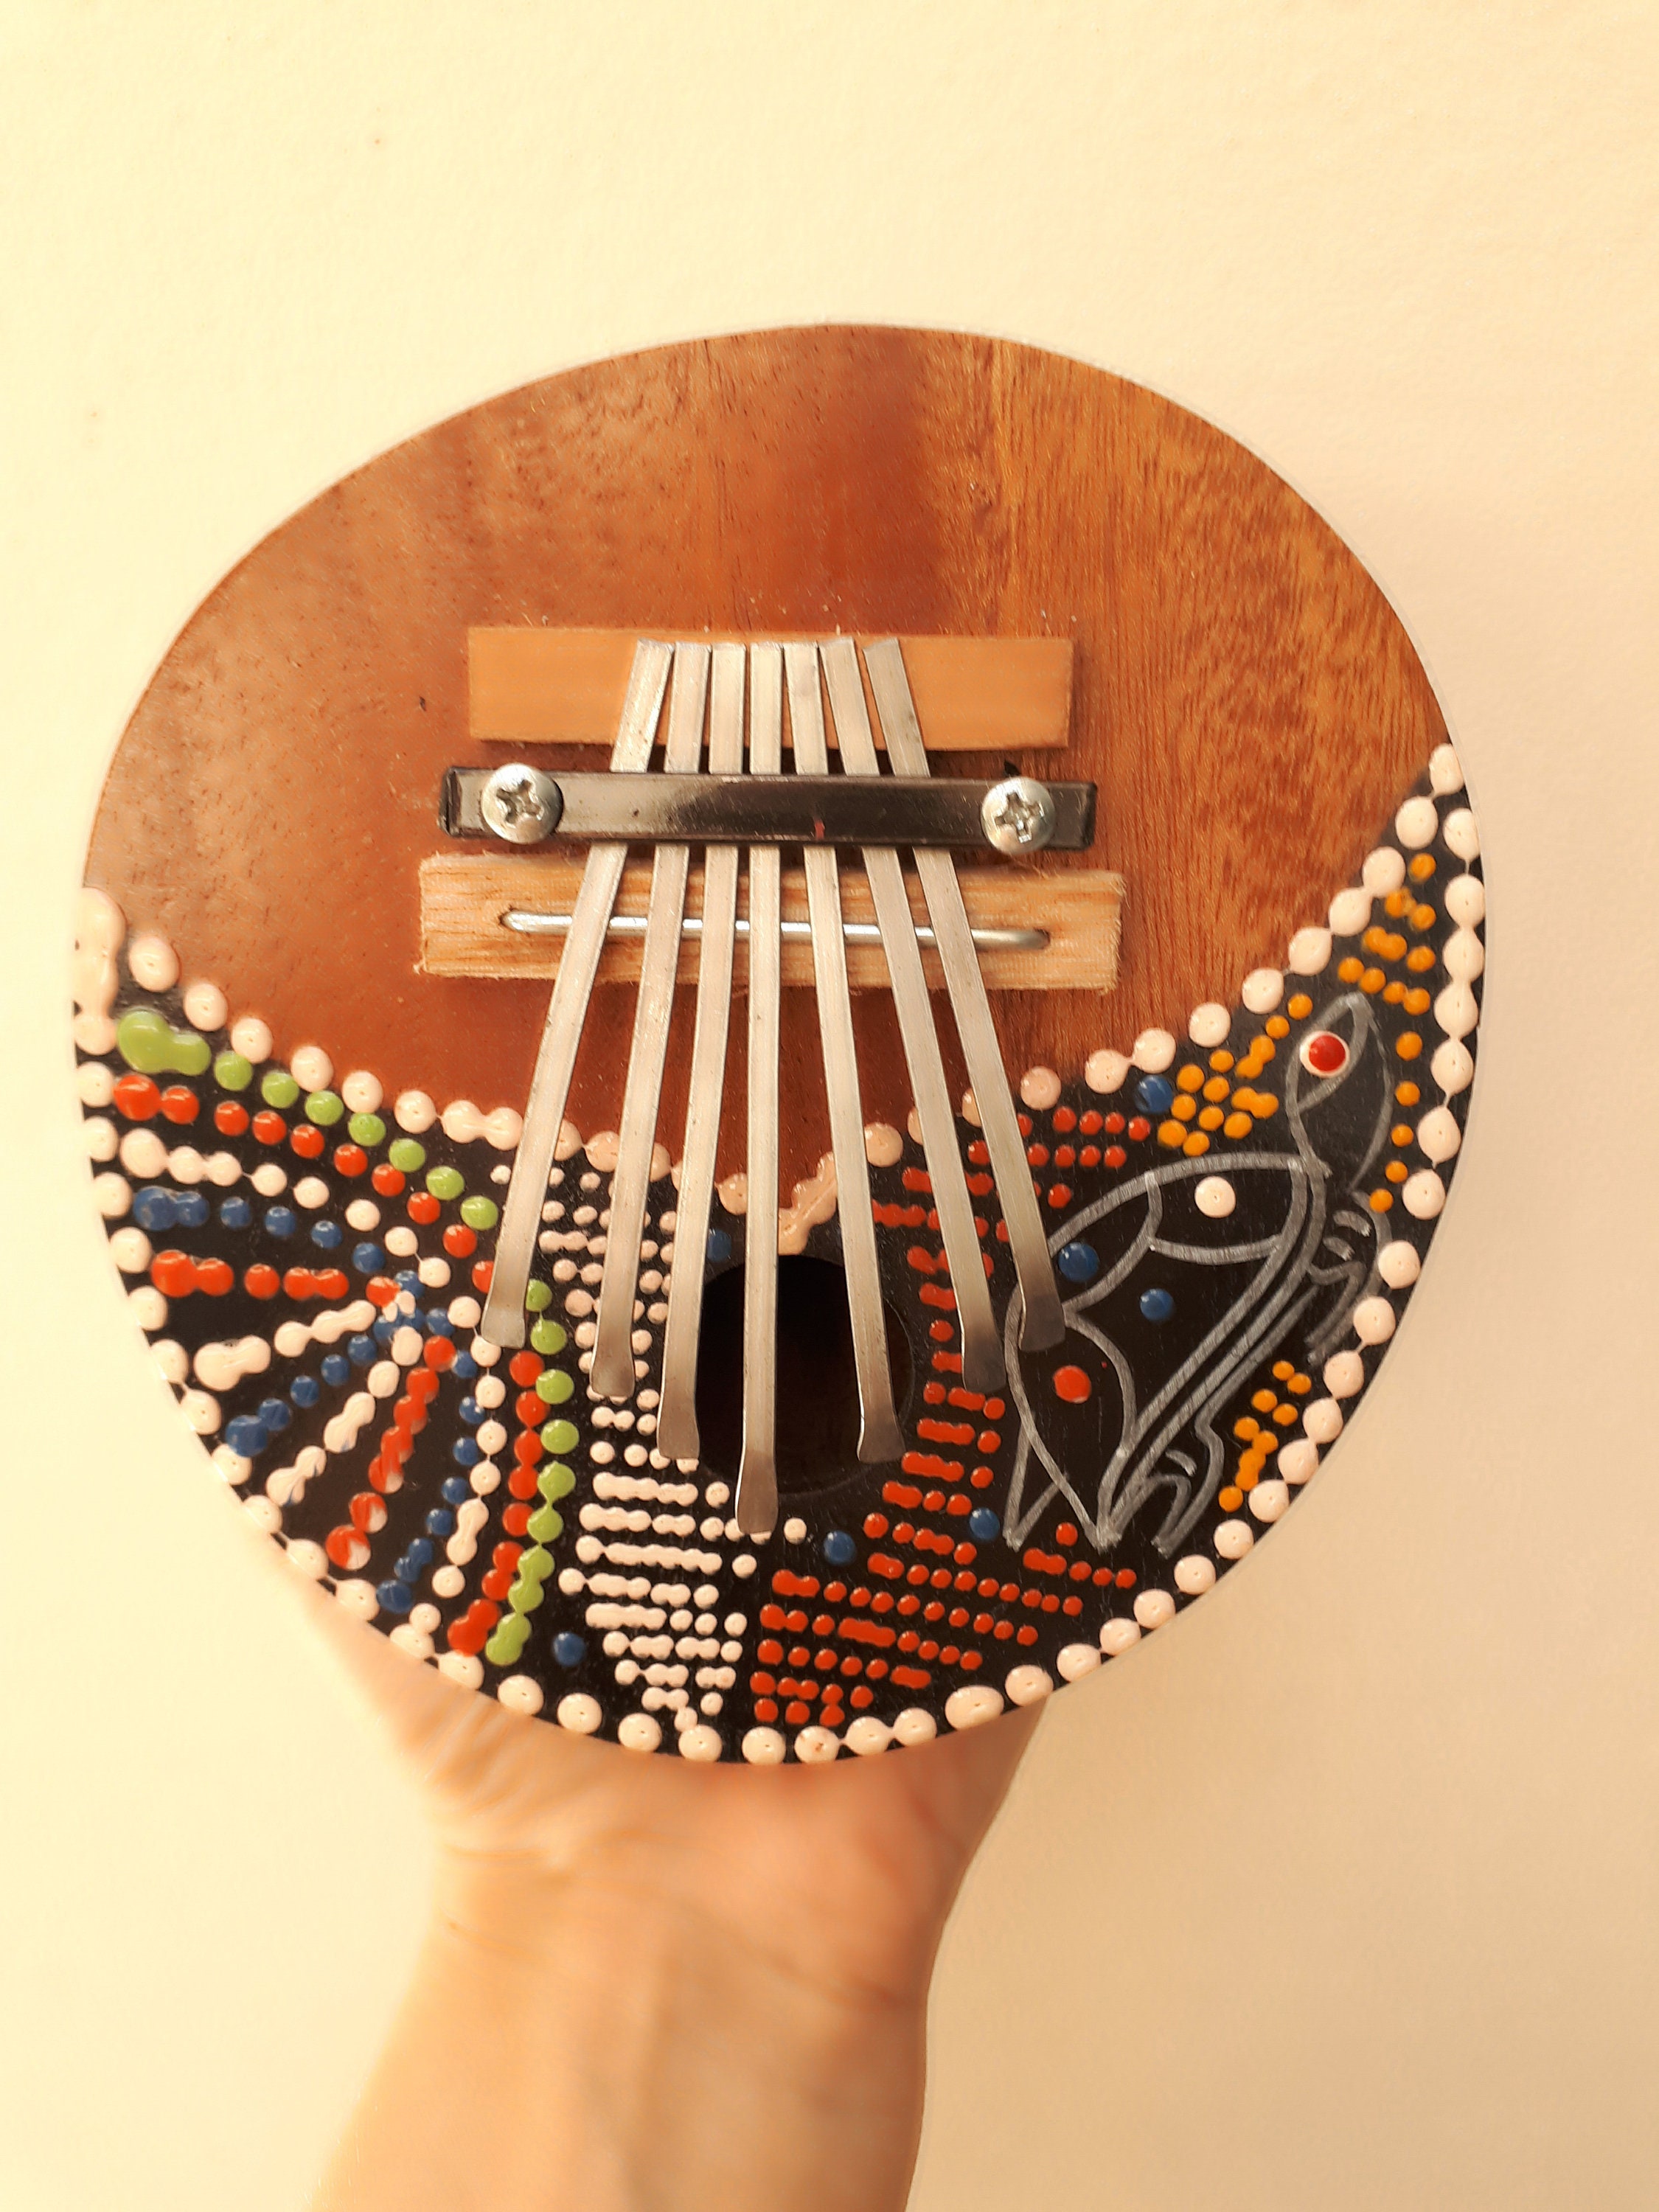 Karimba Kalimba Thumb Piano Percussion Musical Instrument 